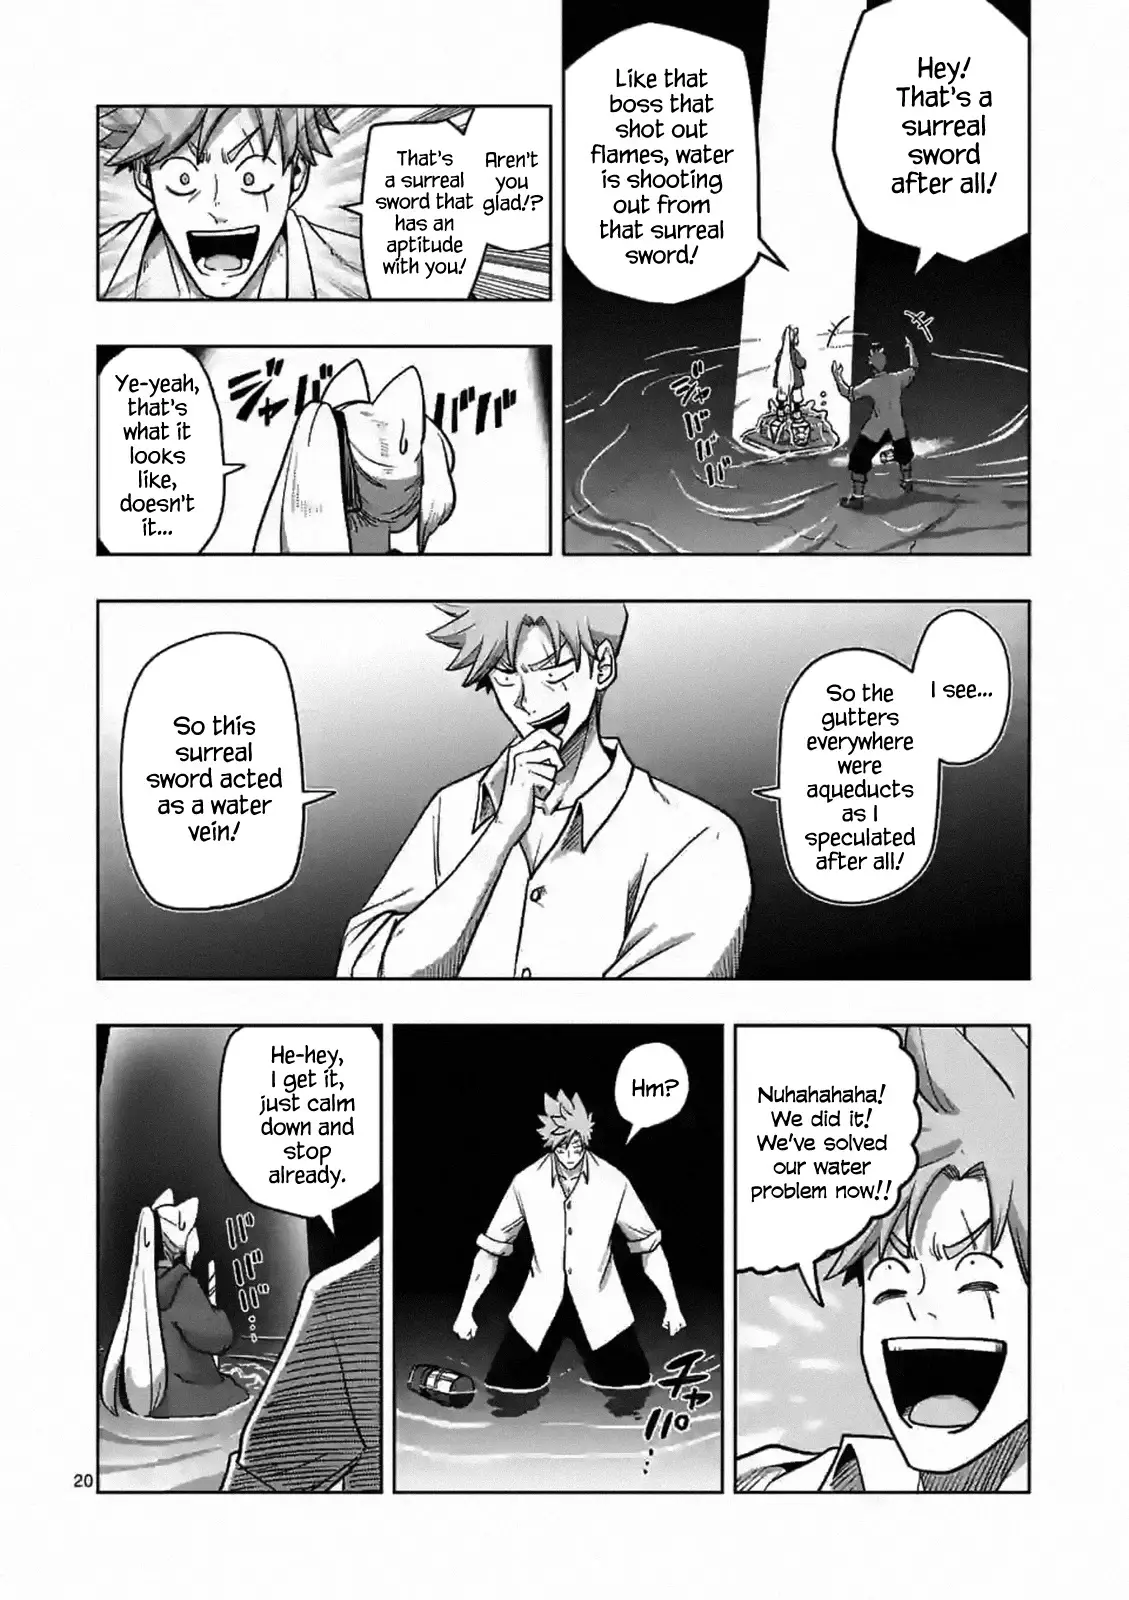 Verndio - Surreal Sword Saga - 2 page 20